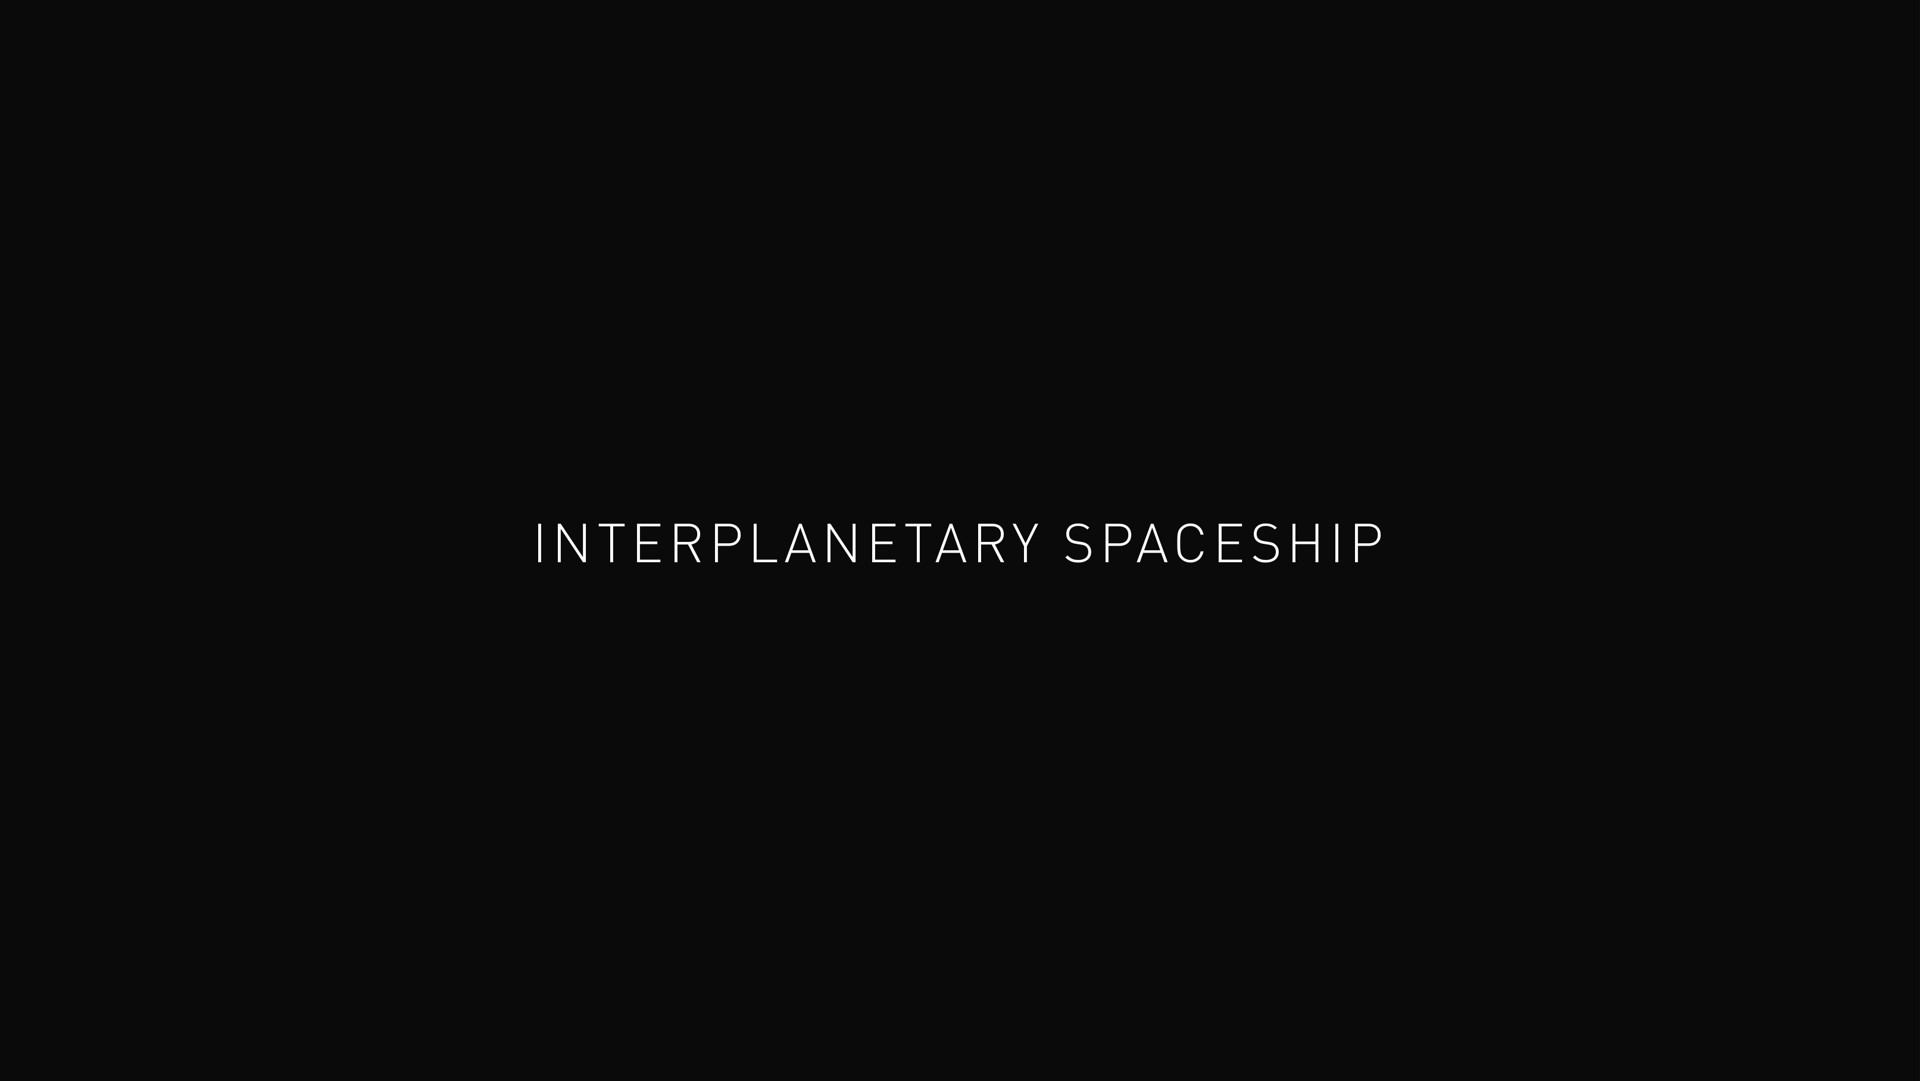 interplanetary spaceship | SpaceX